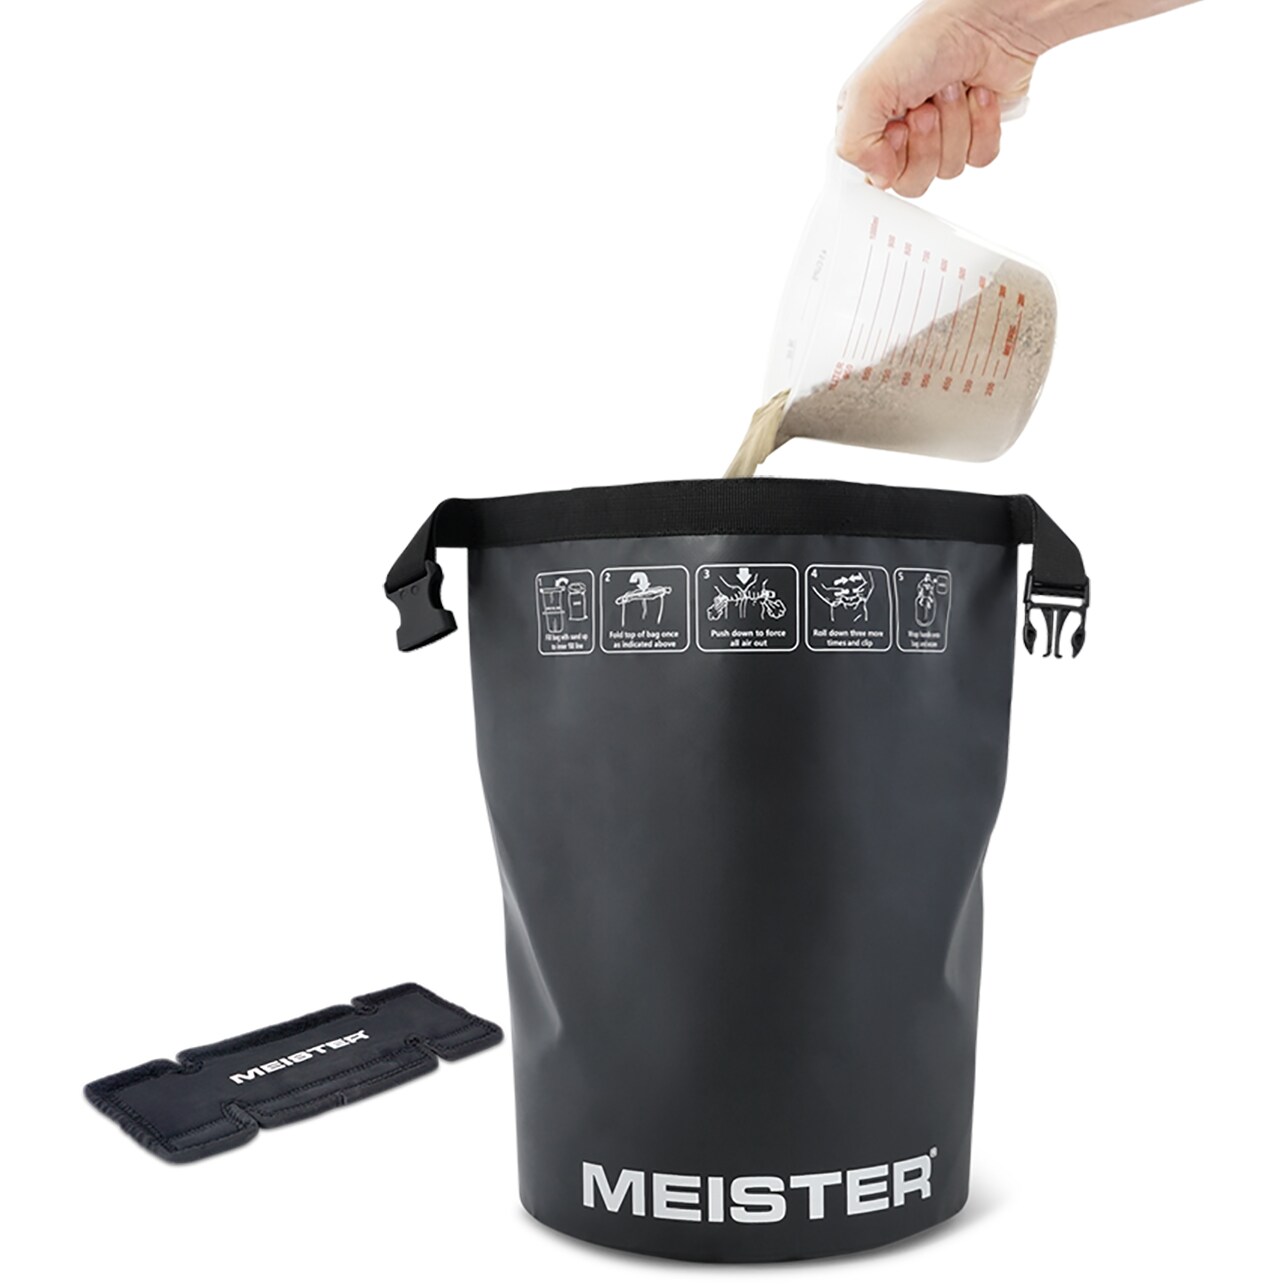 Meister Beast Portable Sand Kettlebell - 35lb / 15.9kg, Neoprene Handle,  Fixed-weight, Black Finish, Commercial/Residential Grade in the Kettlebells  department at